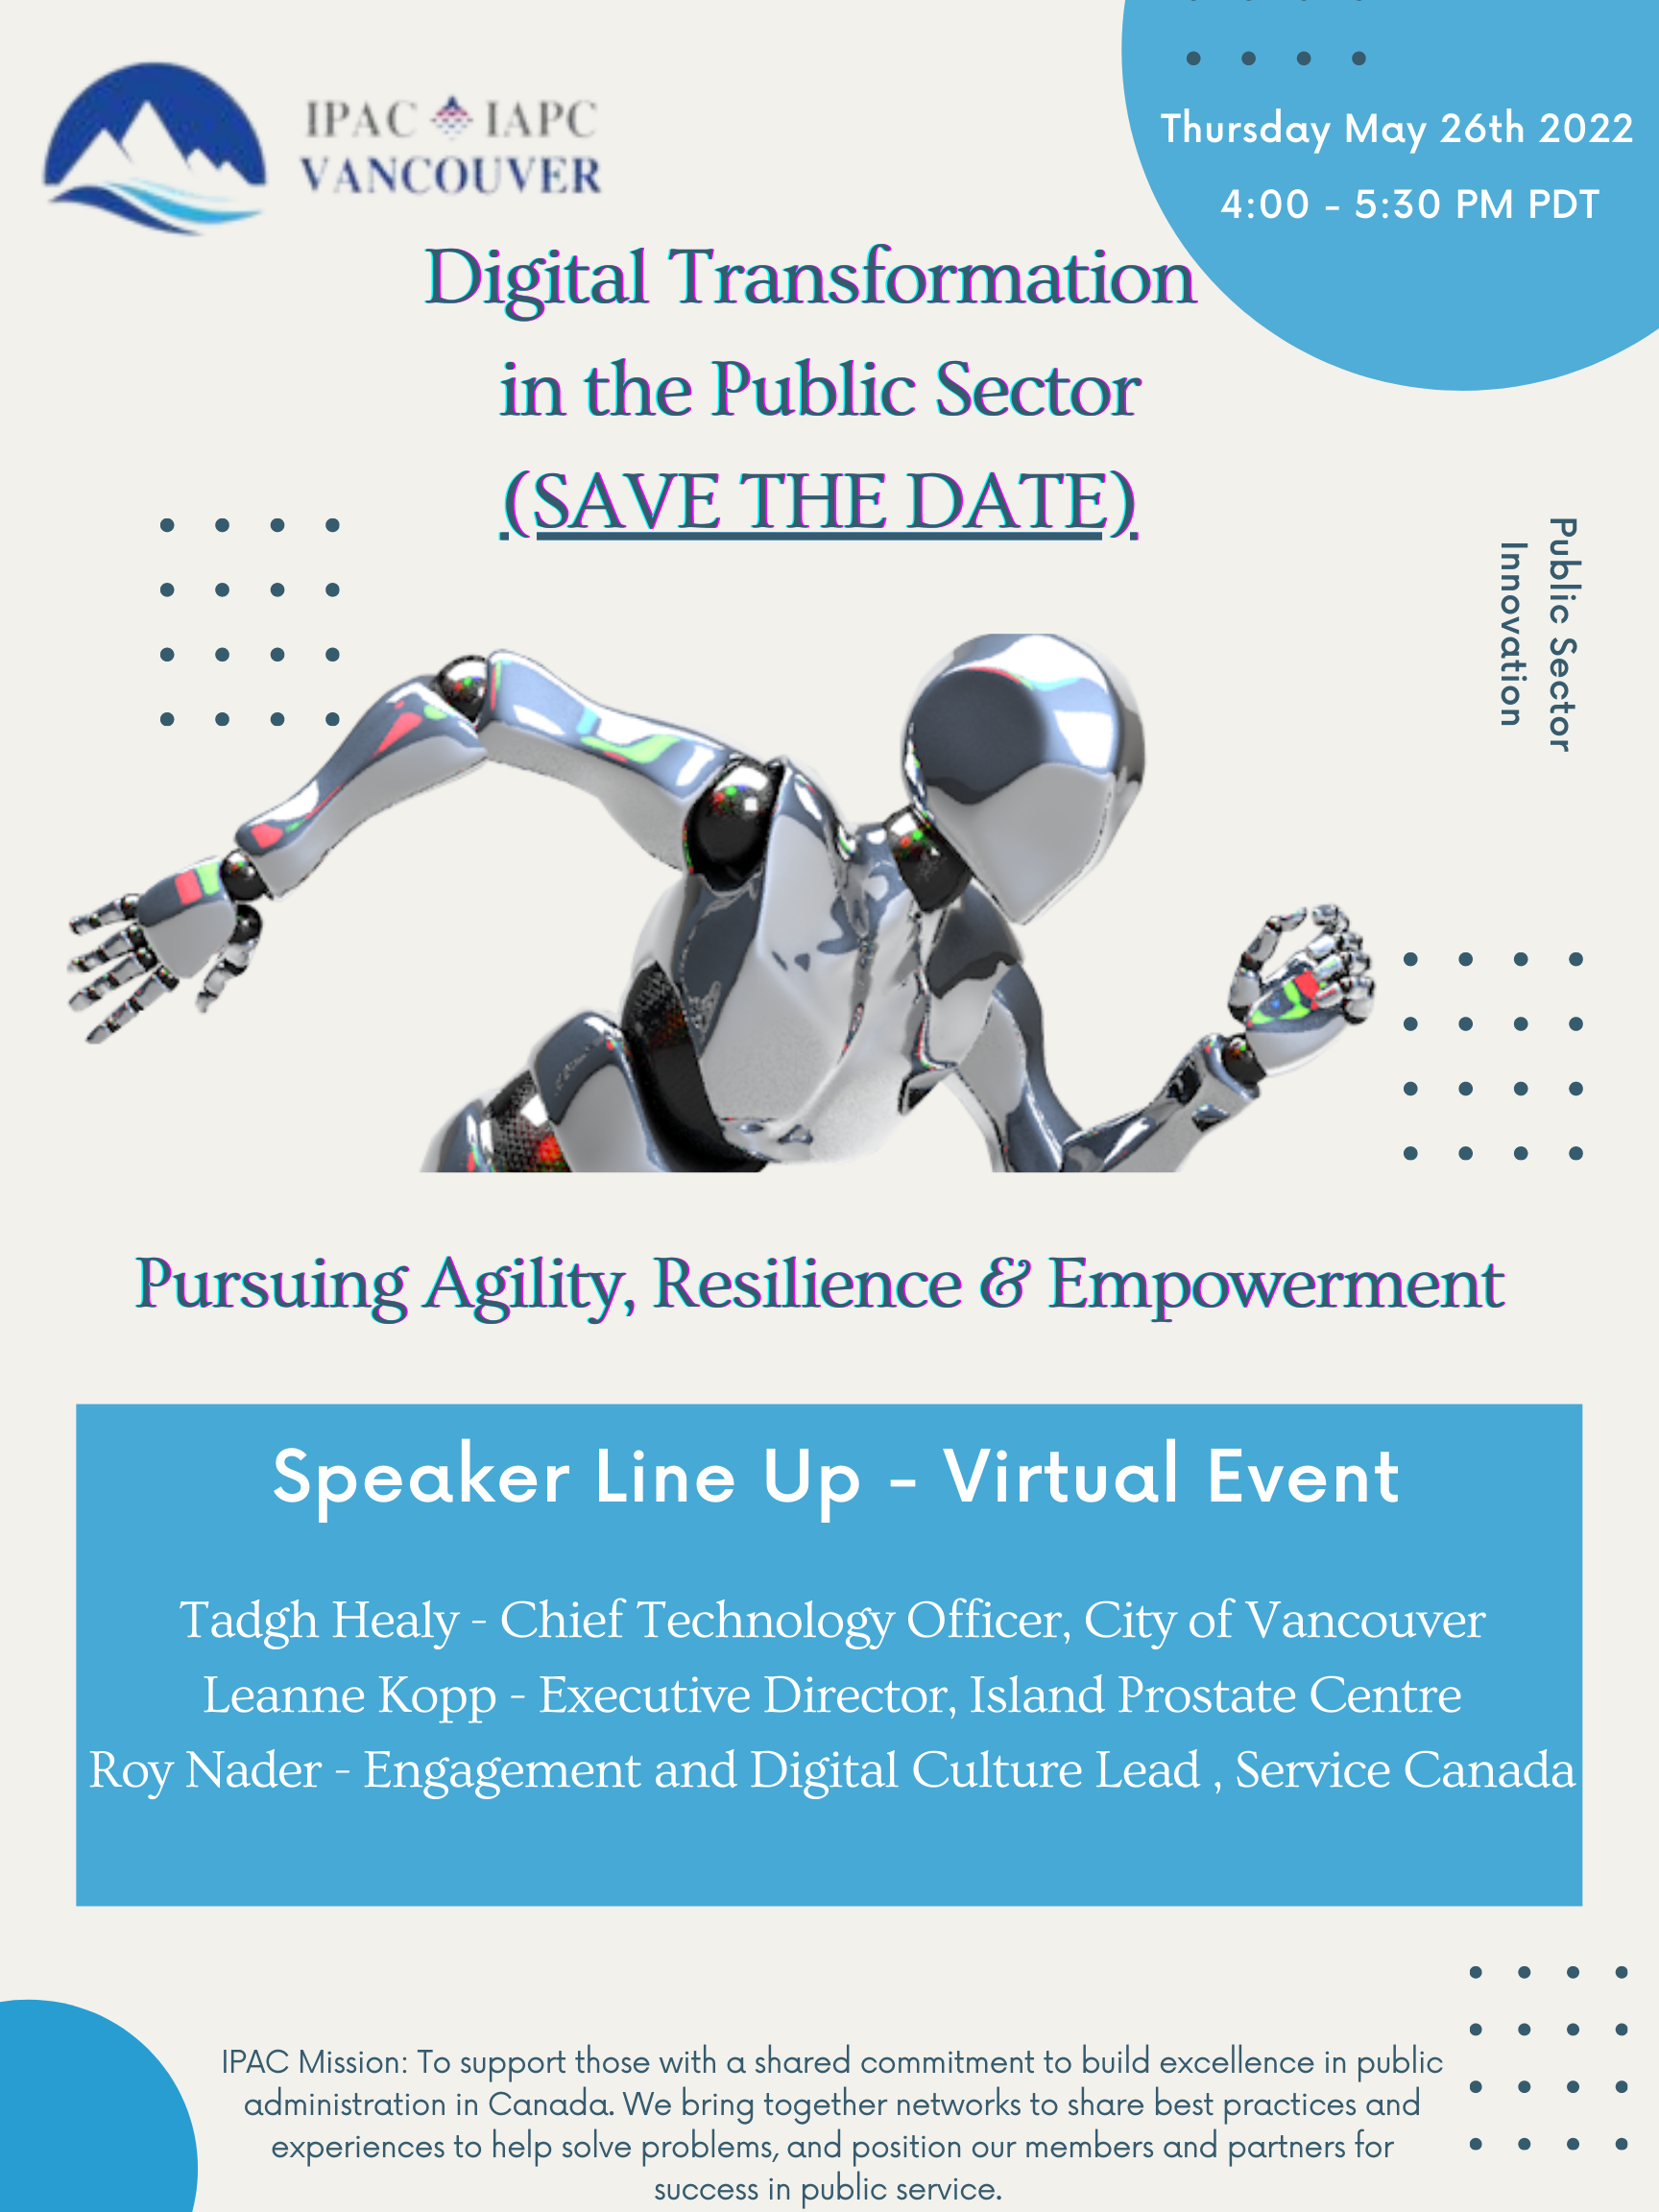 Vancouver Digital Transformation Event